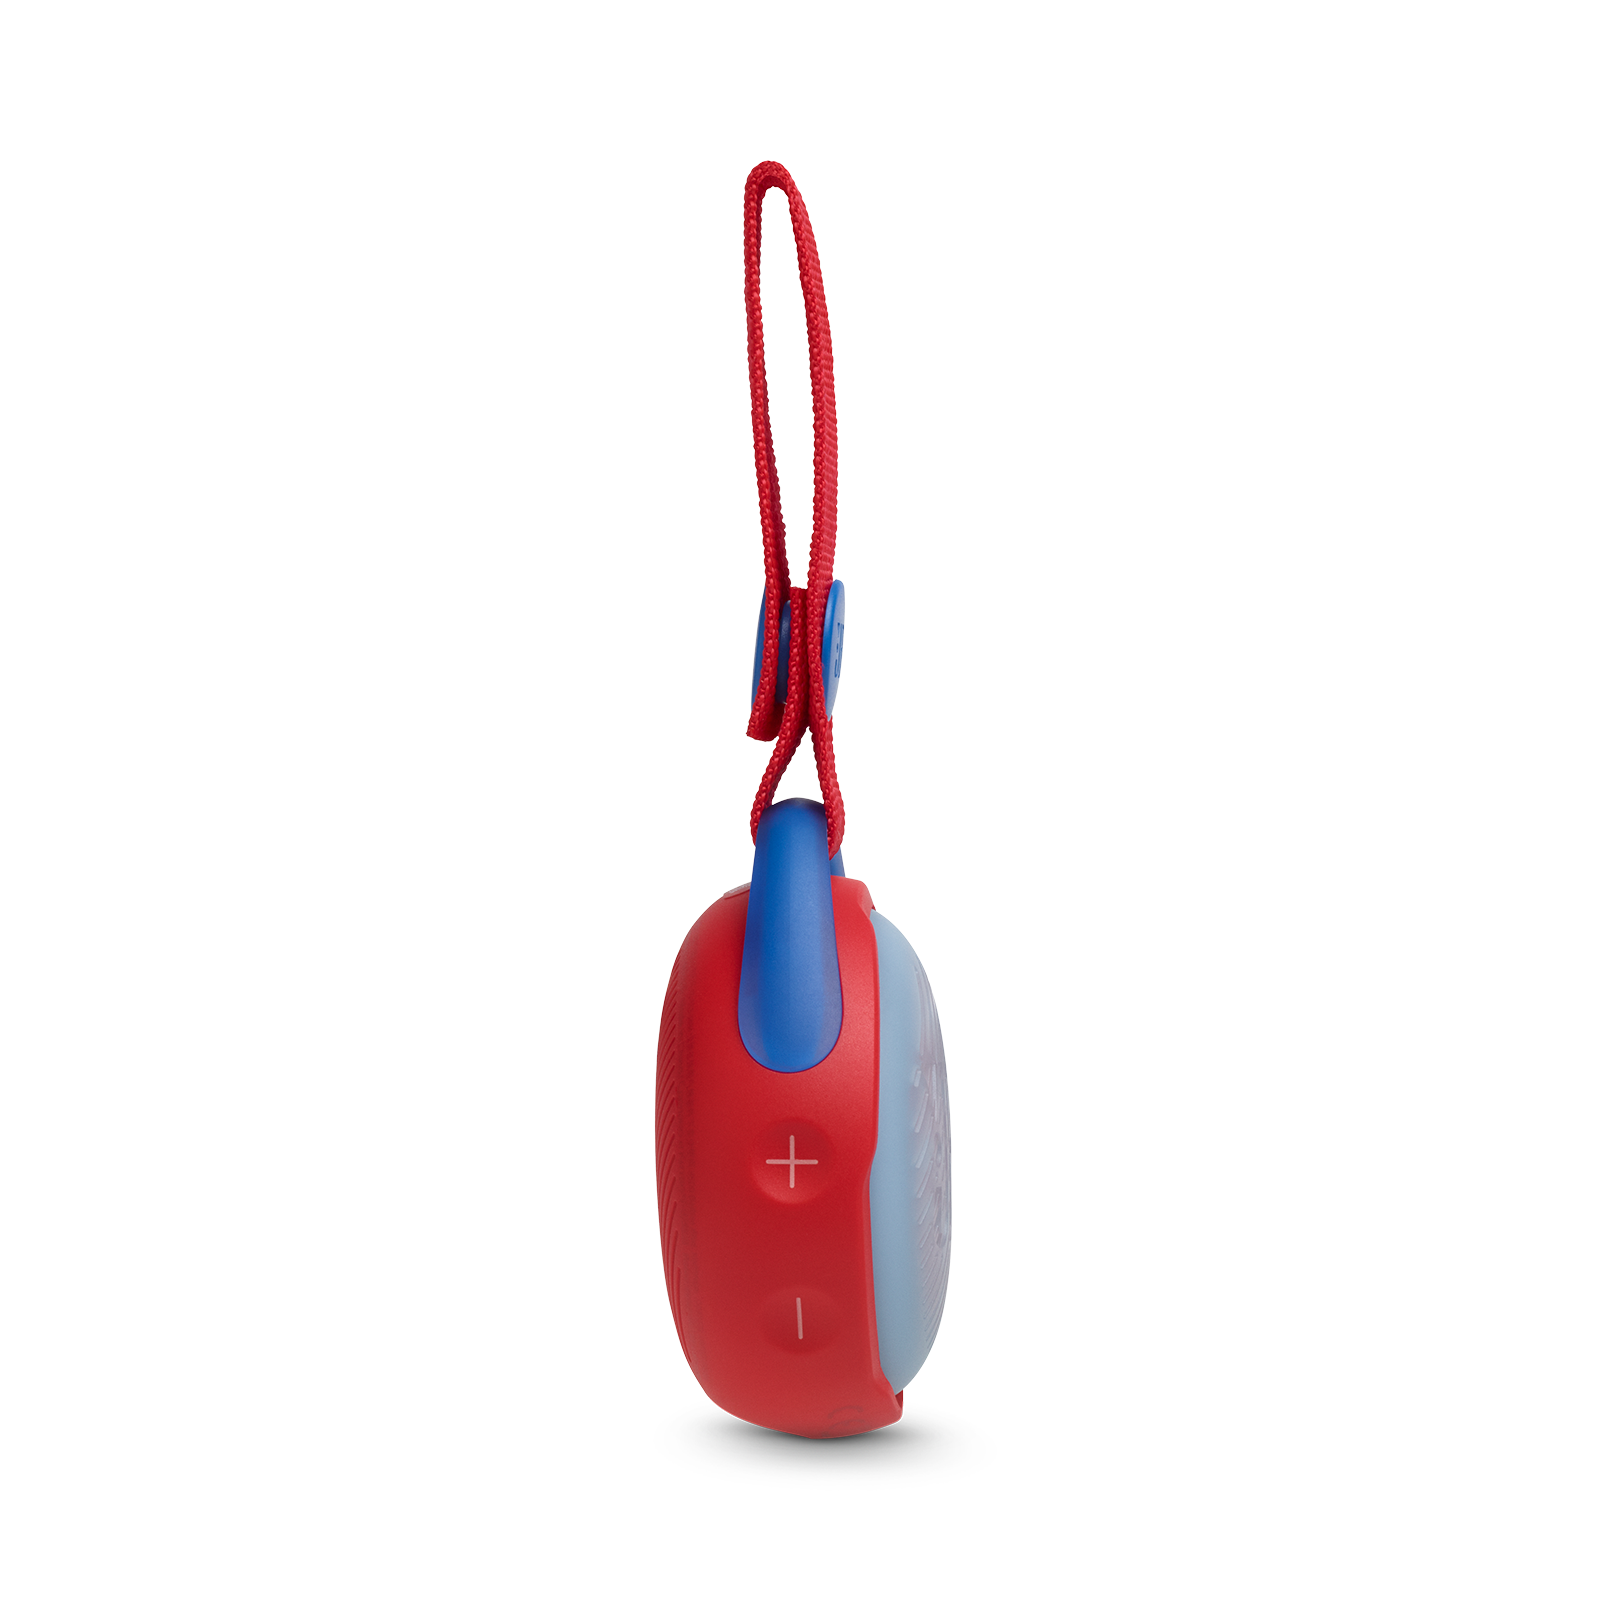 JBL JR Pop - Red - Portable speaker for kids - Detailshot 1